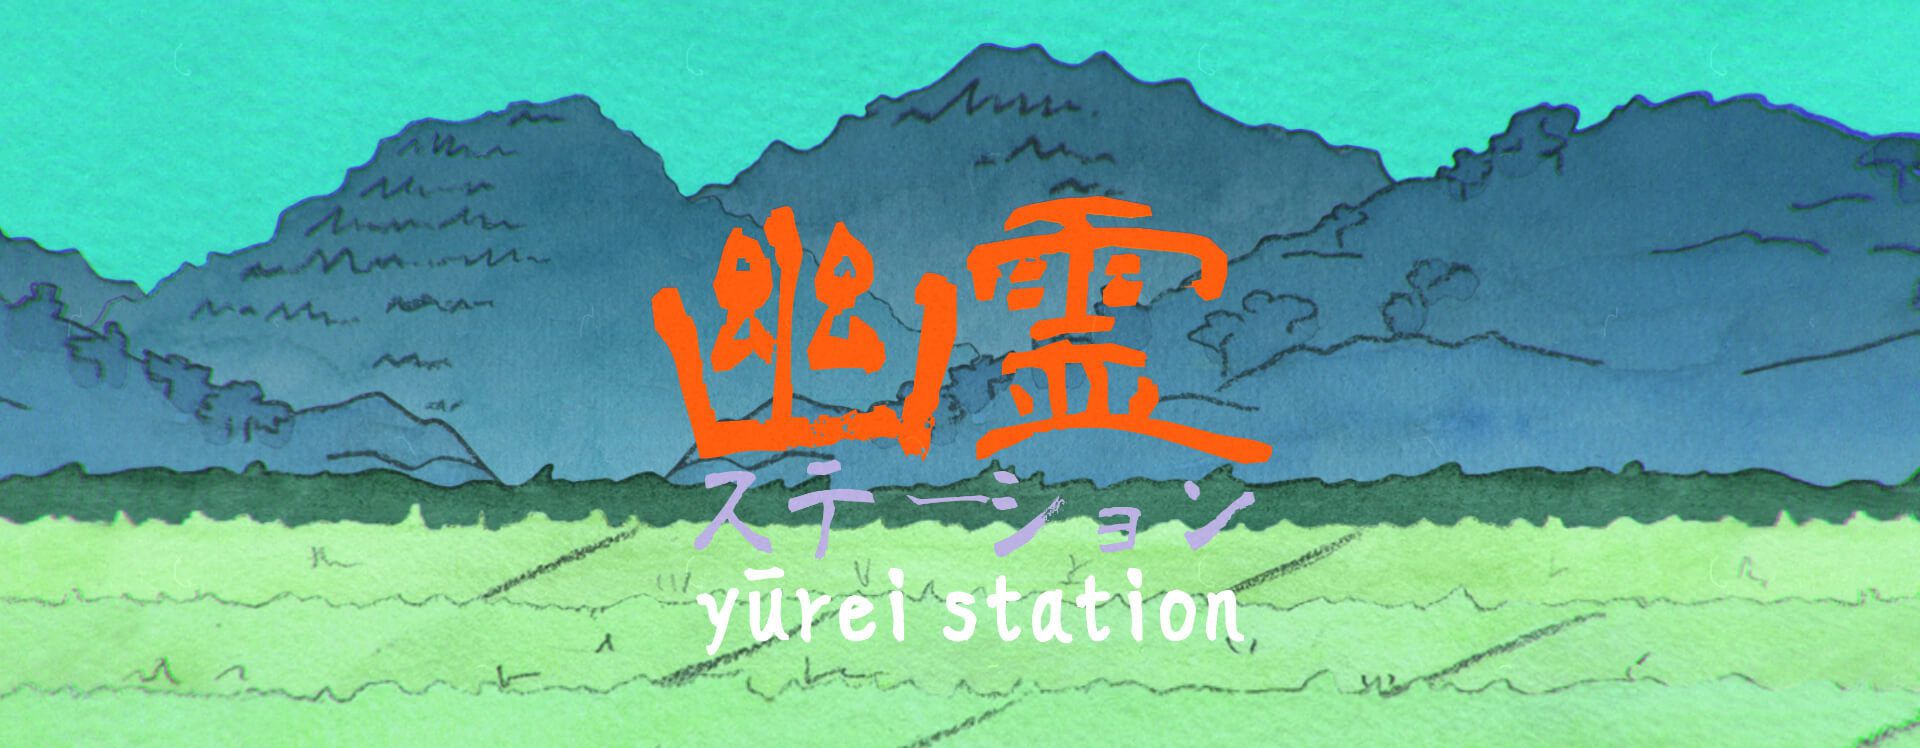 watercolor indie game by atelier sento set in japan